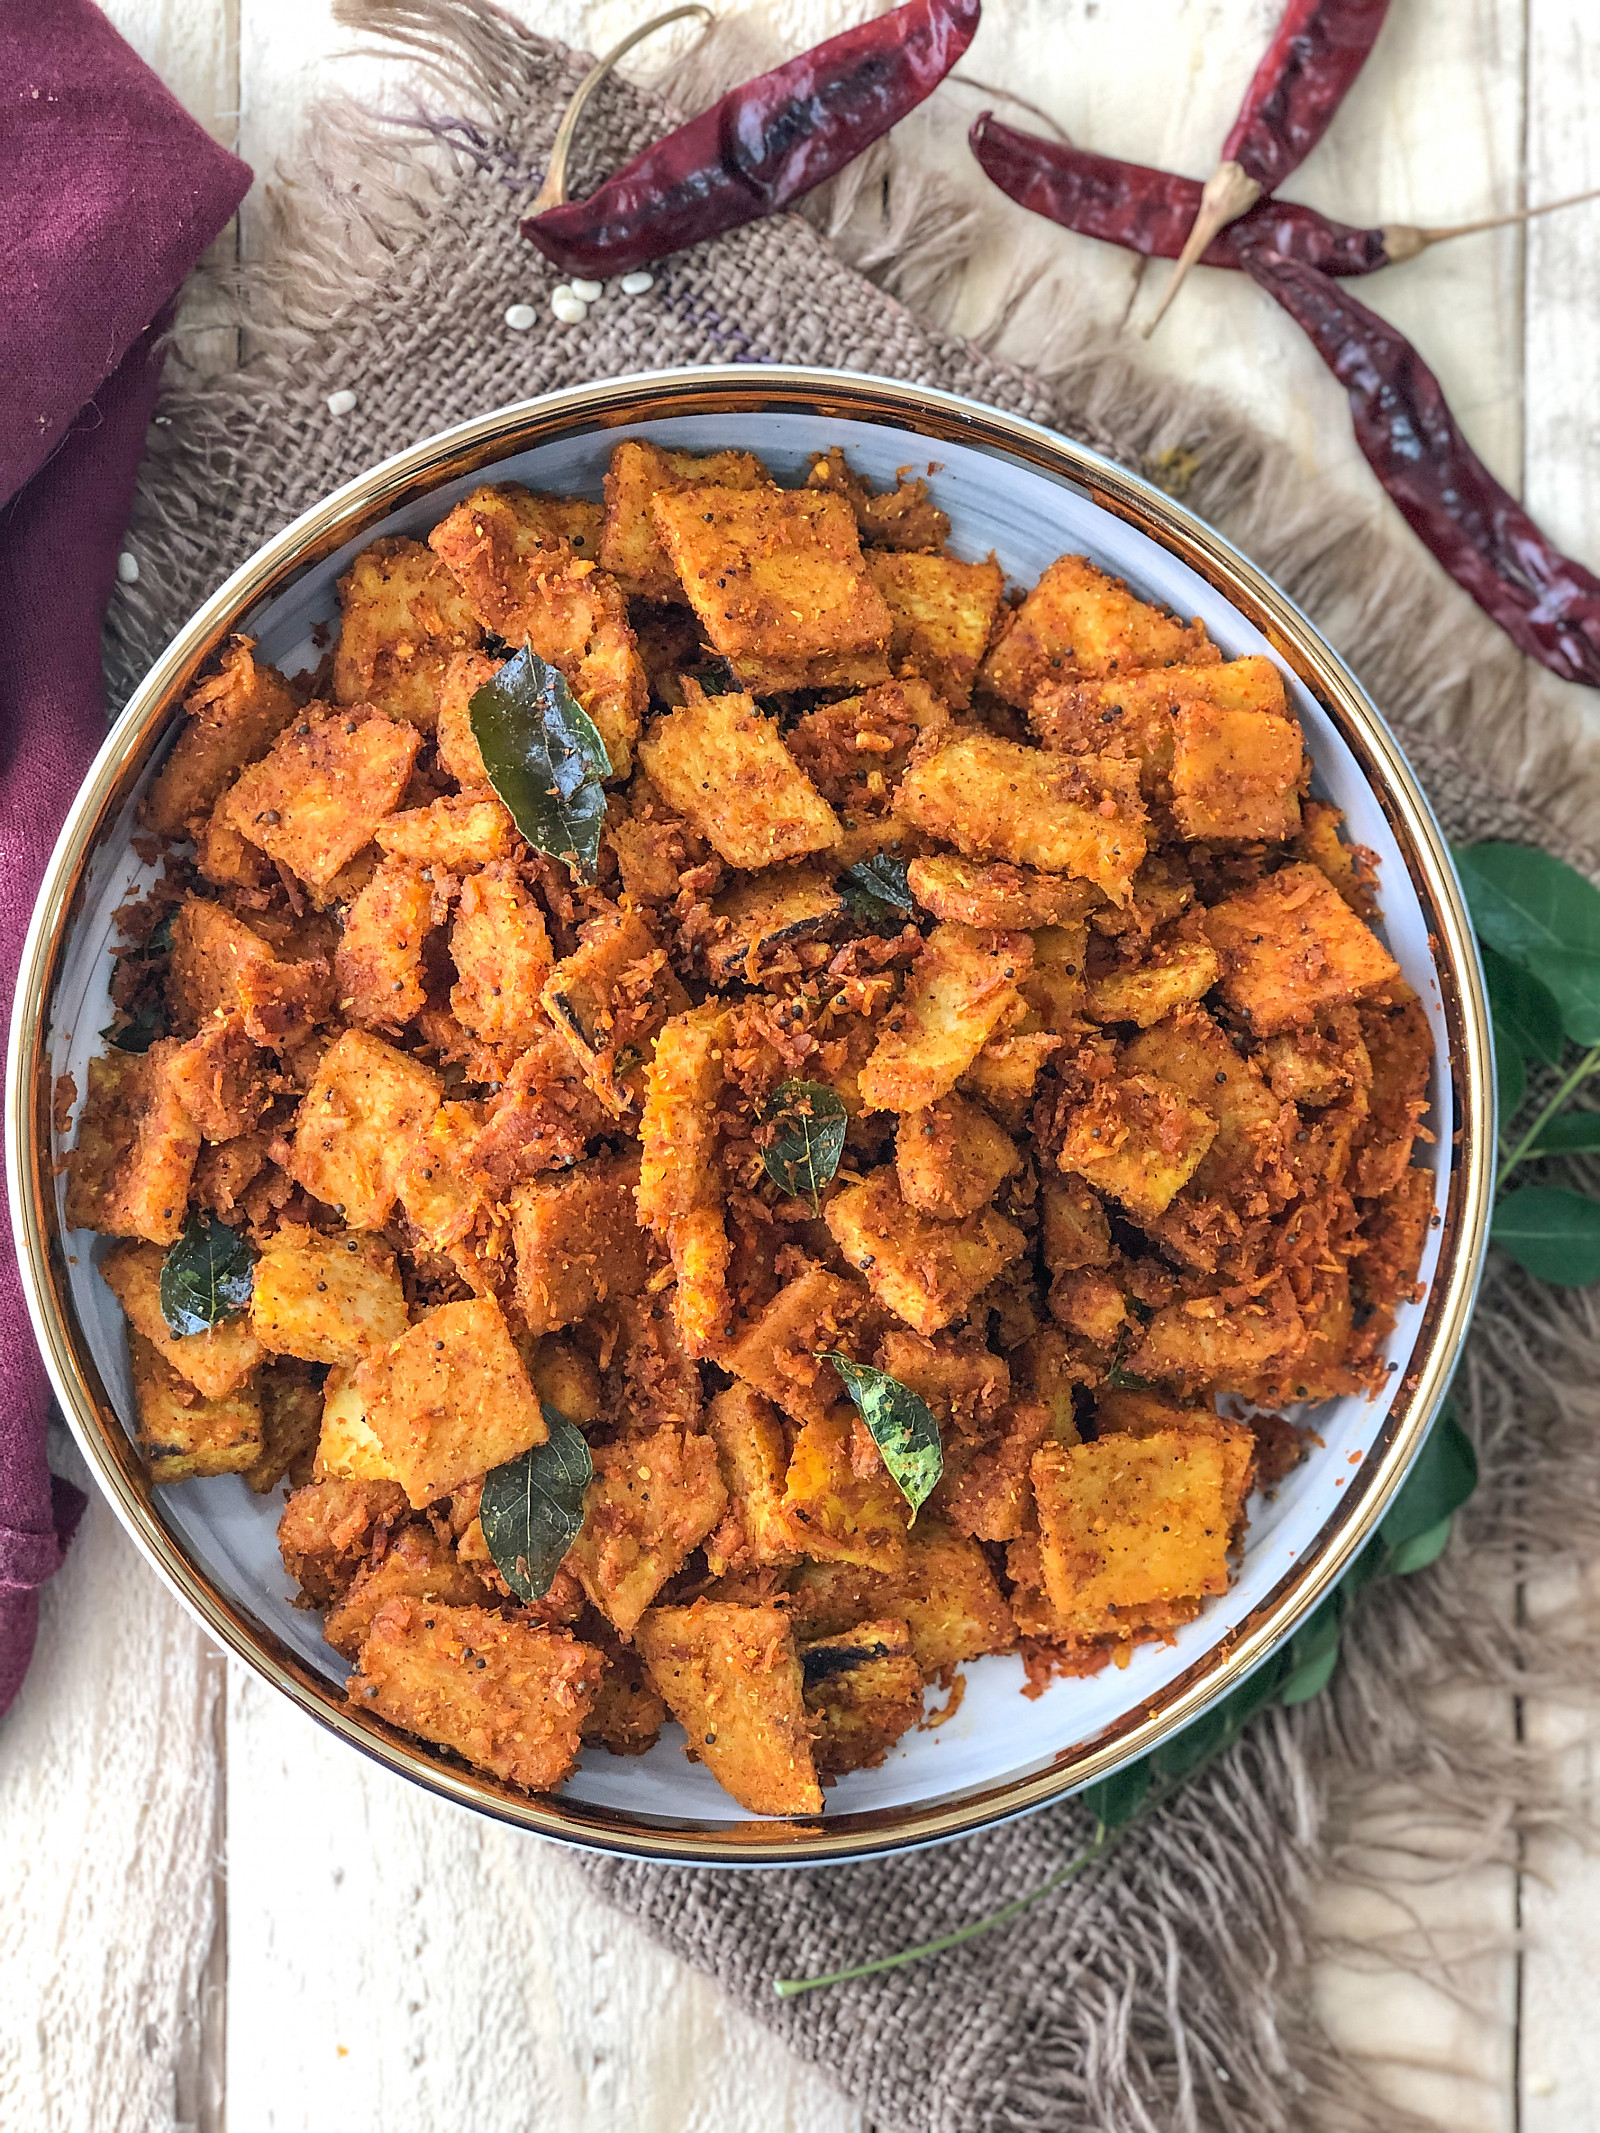 Kalyana Veetu Senai Curry Recipe - South Indian Spicy Roasted Yam